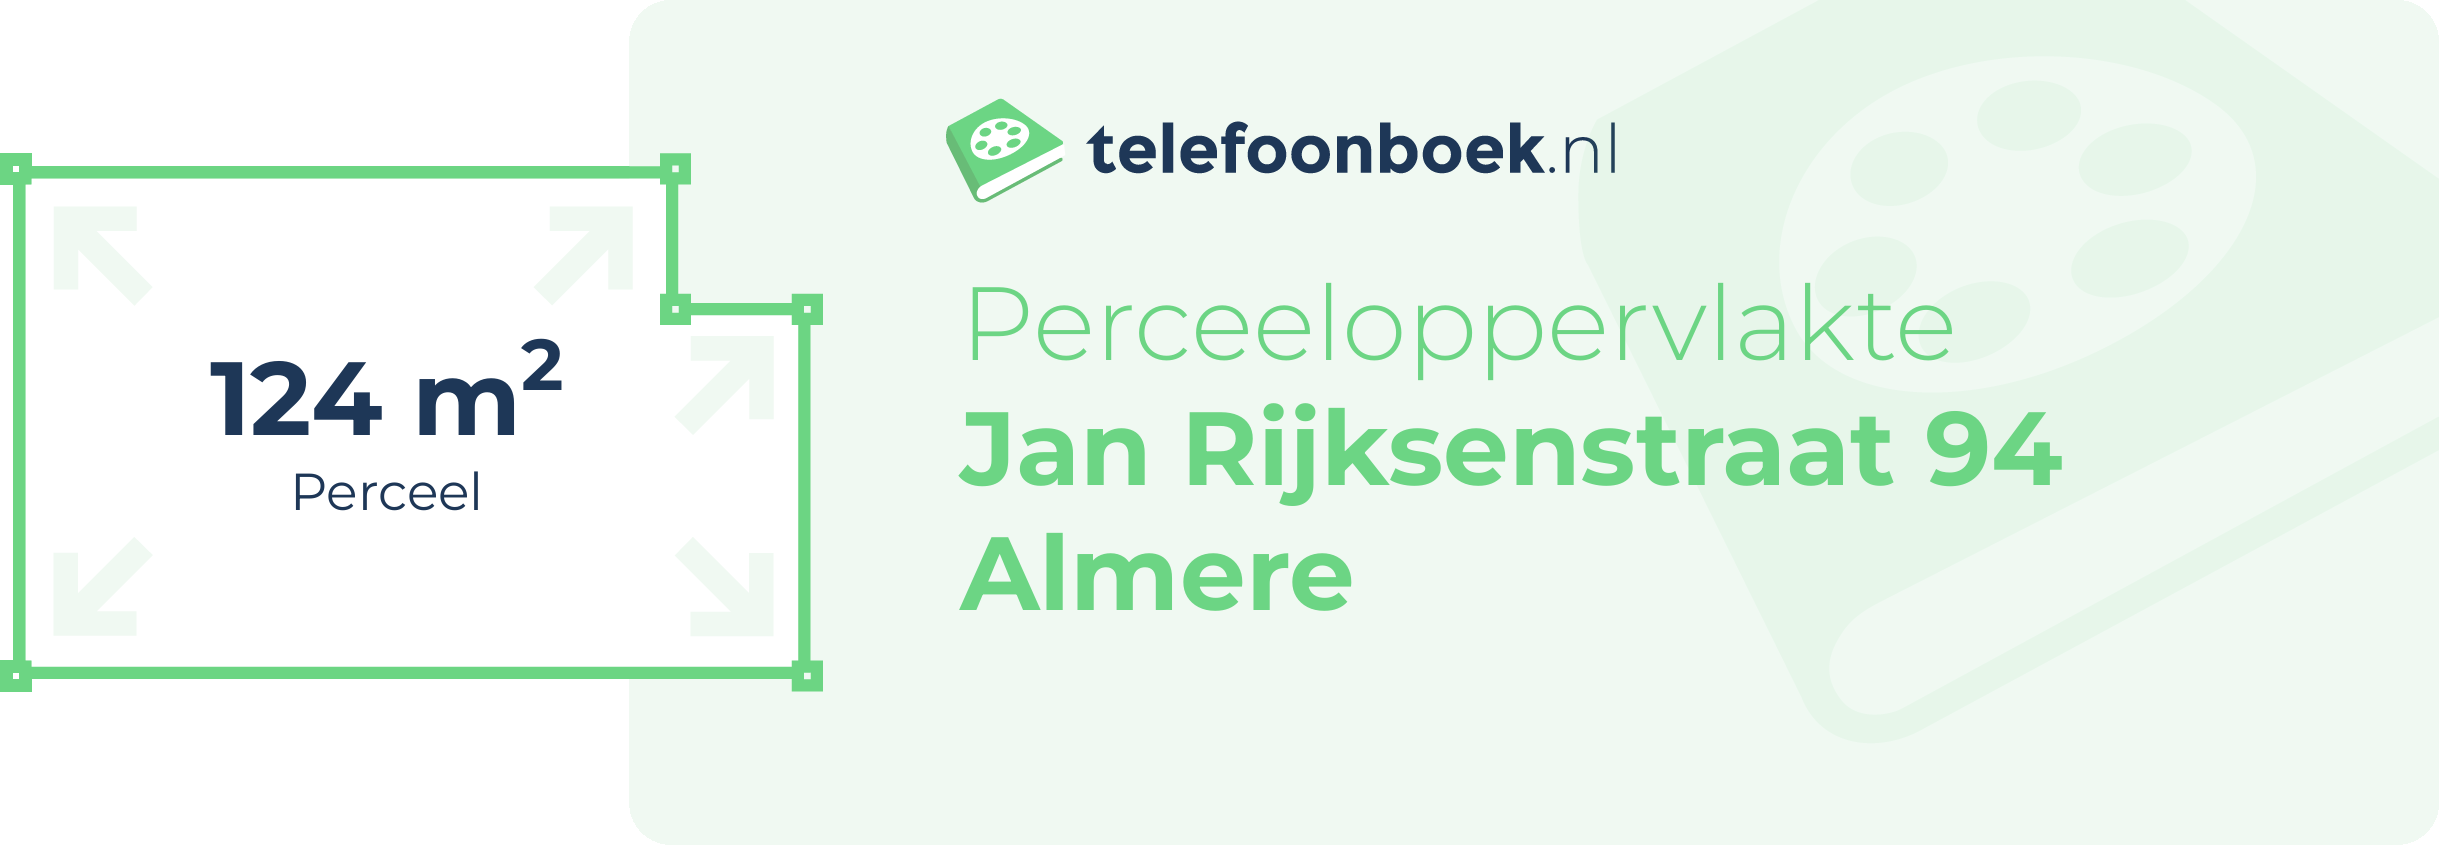 Perceeloppervlakte Jan Rijksenstraat 94 Almere